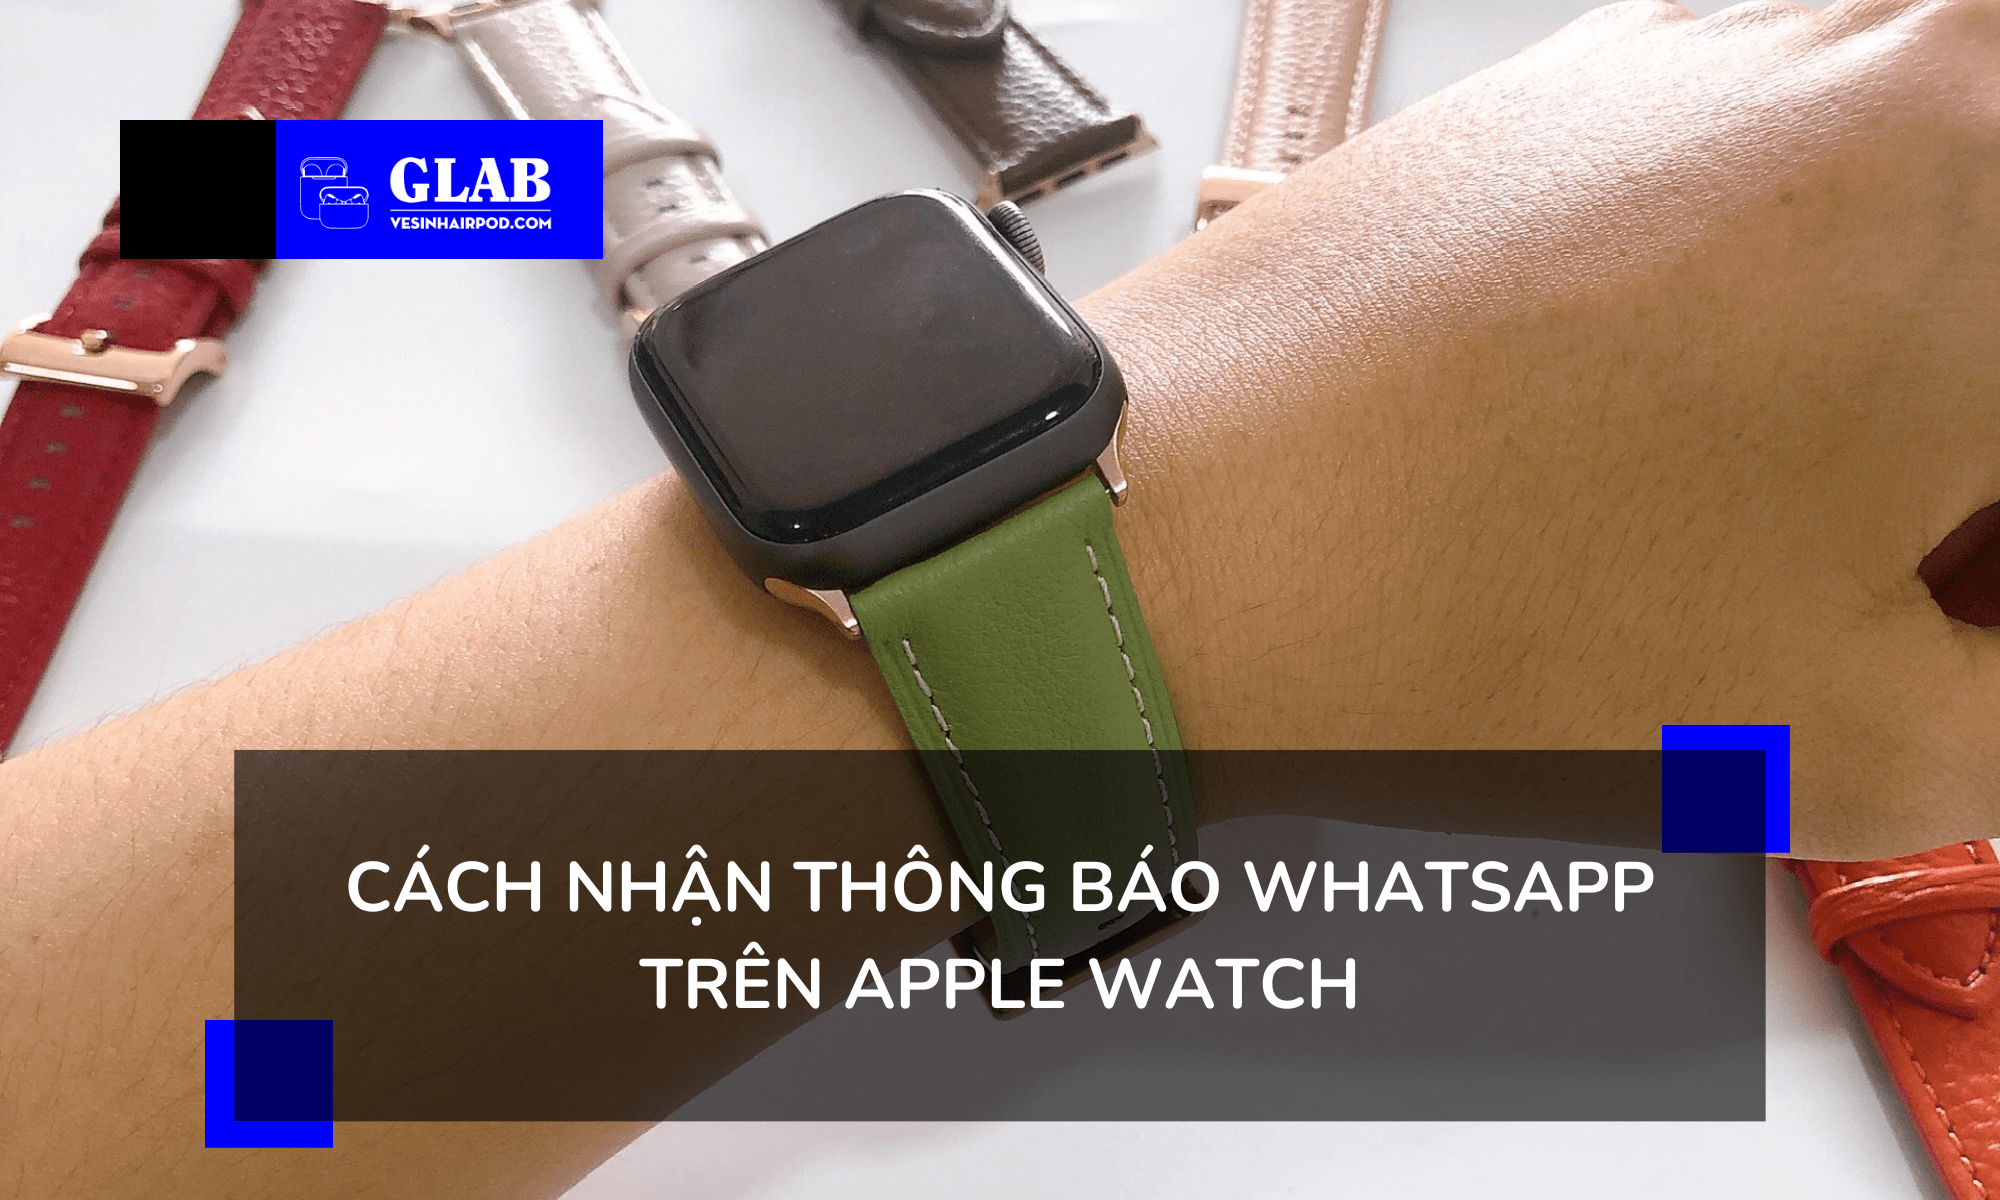 su-dung-WhatsApp- Apple-Watch